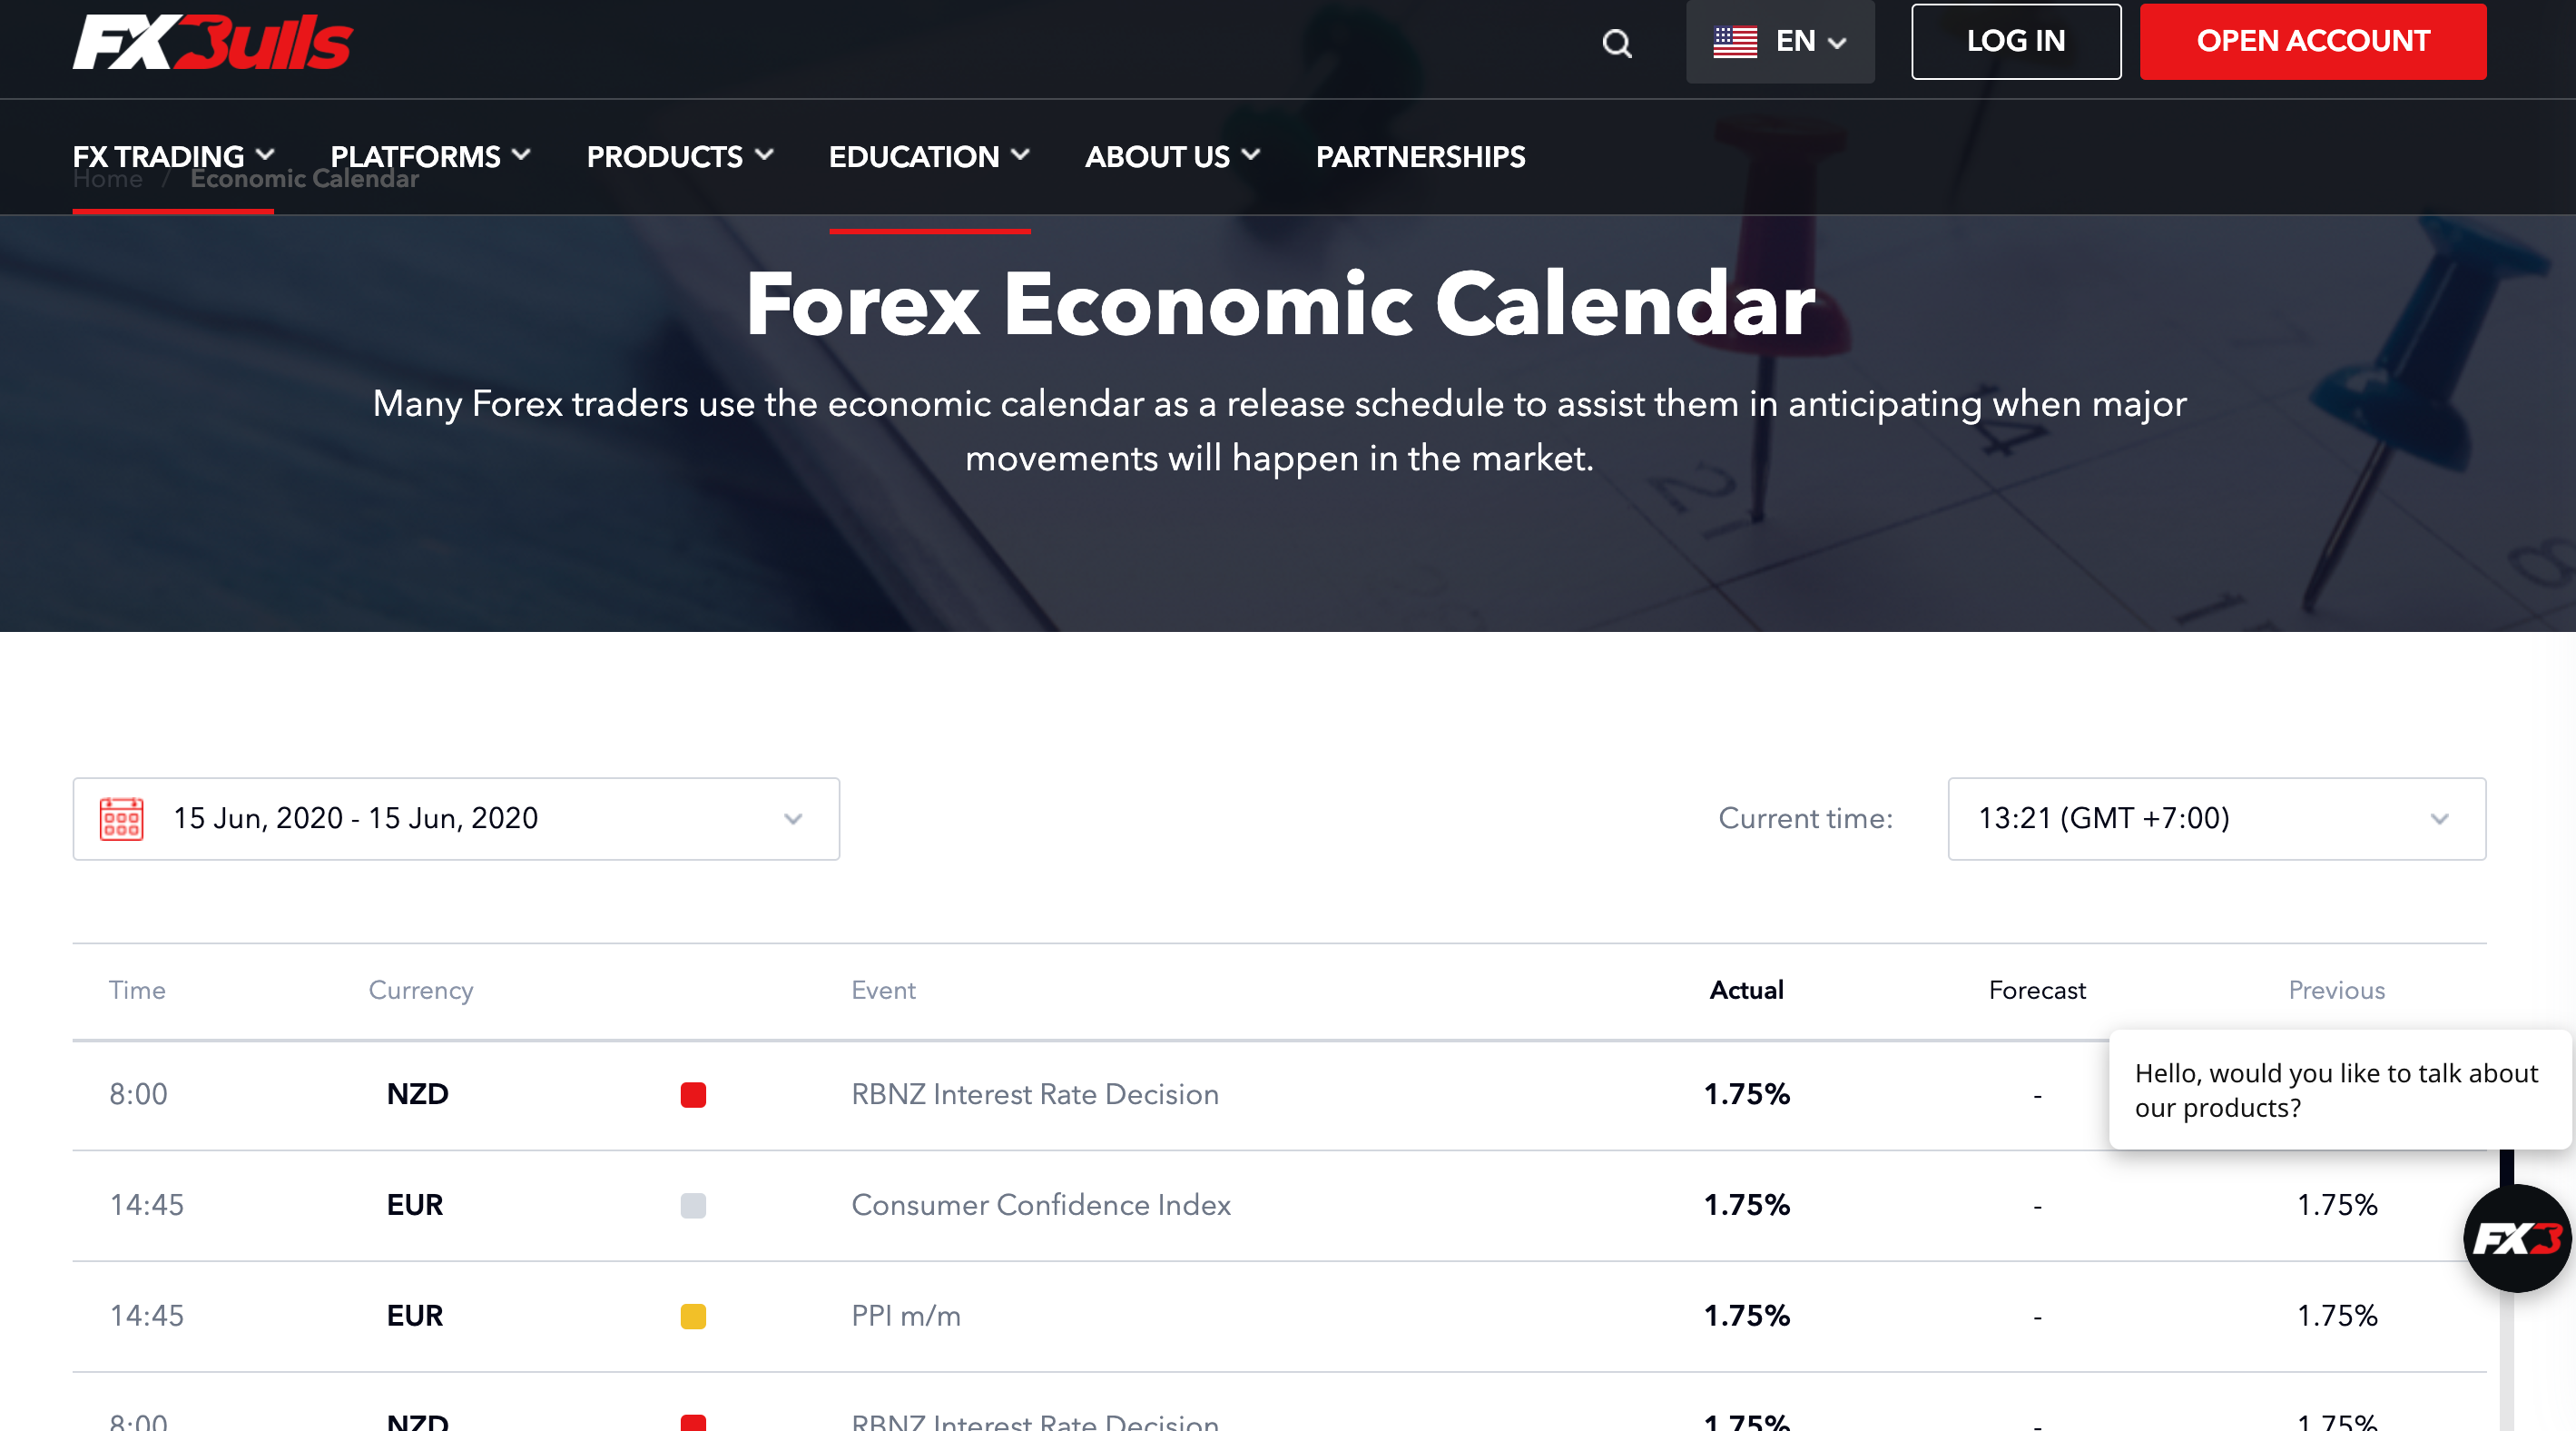 FXBulls economic calendar